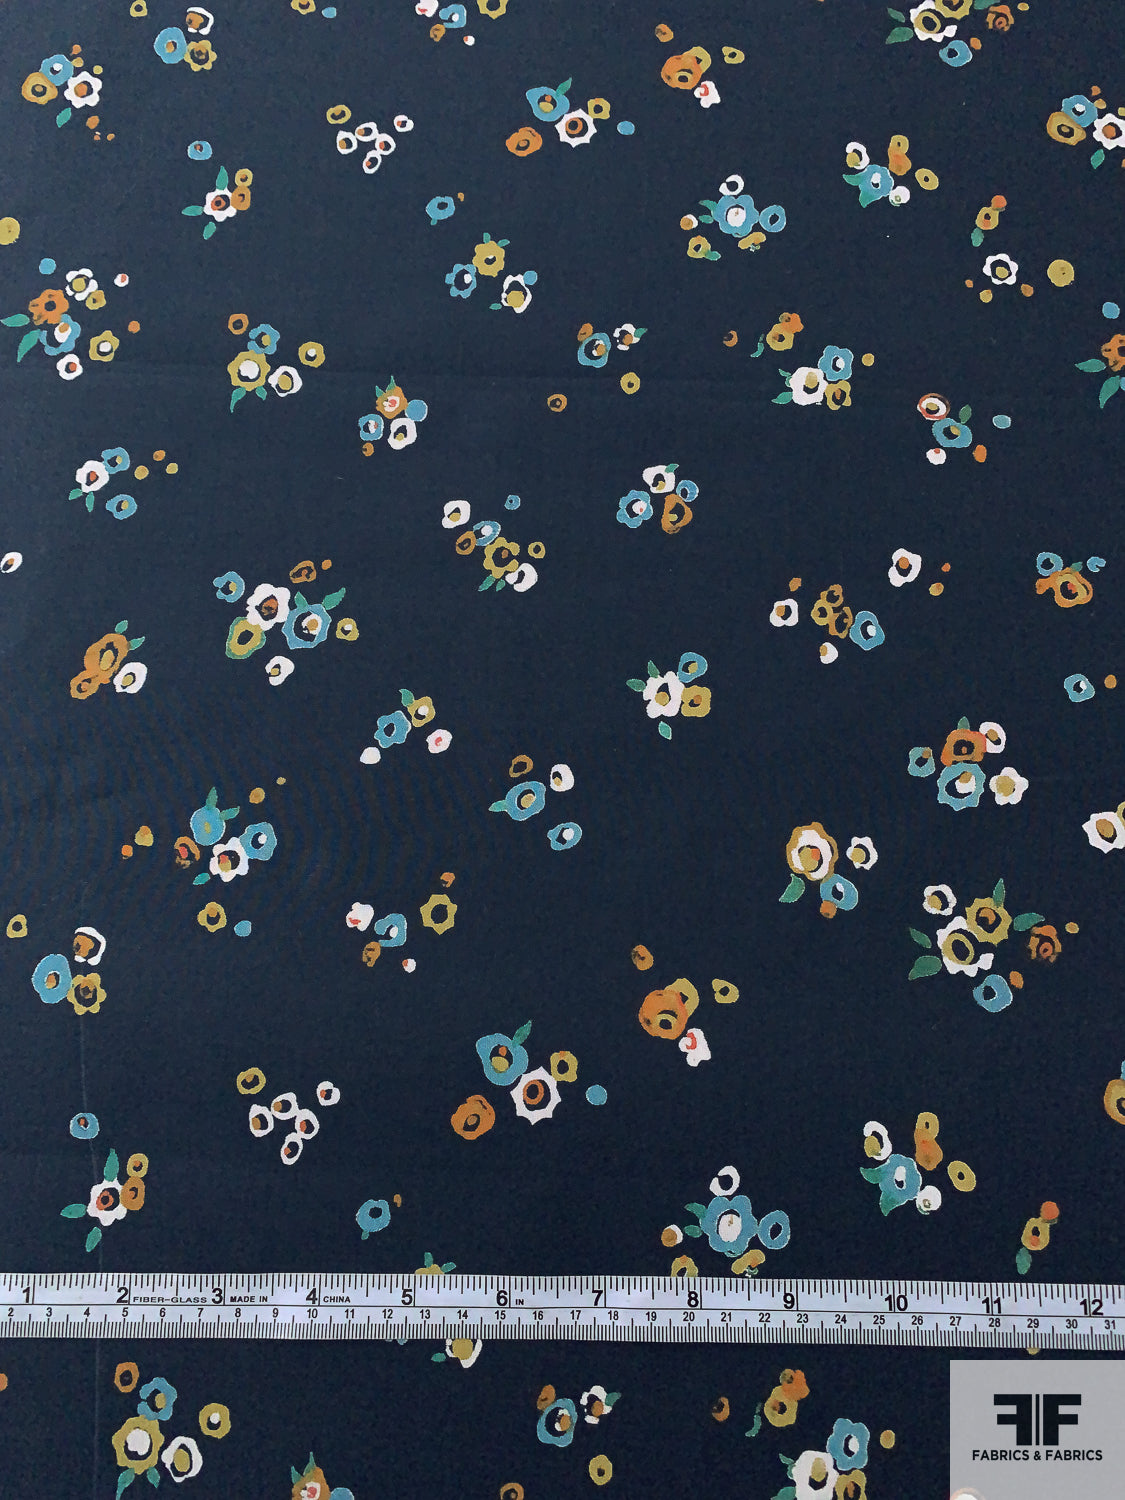 Ditsy Blotch Floral Printed Cotton Lawn - Navy / Blue / Orange / Ochre / Green